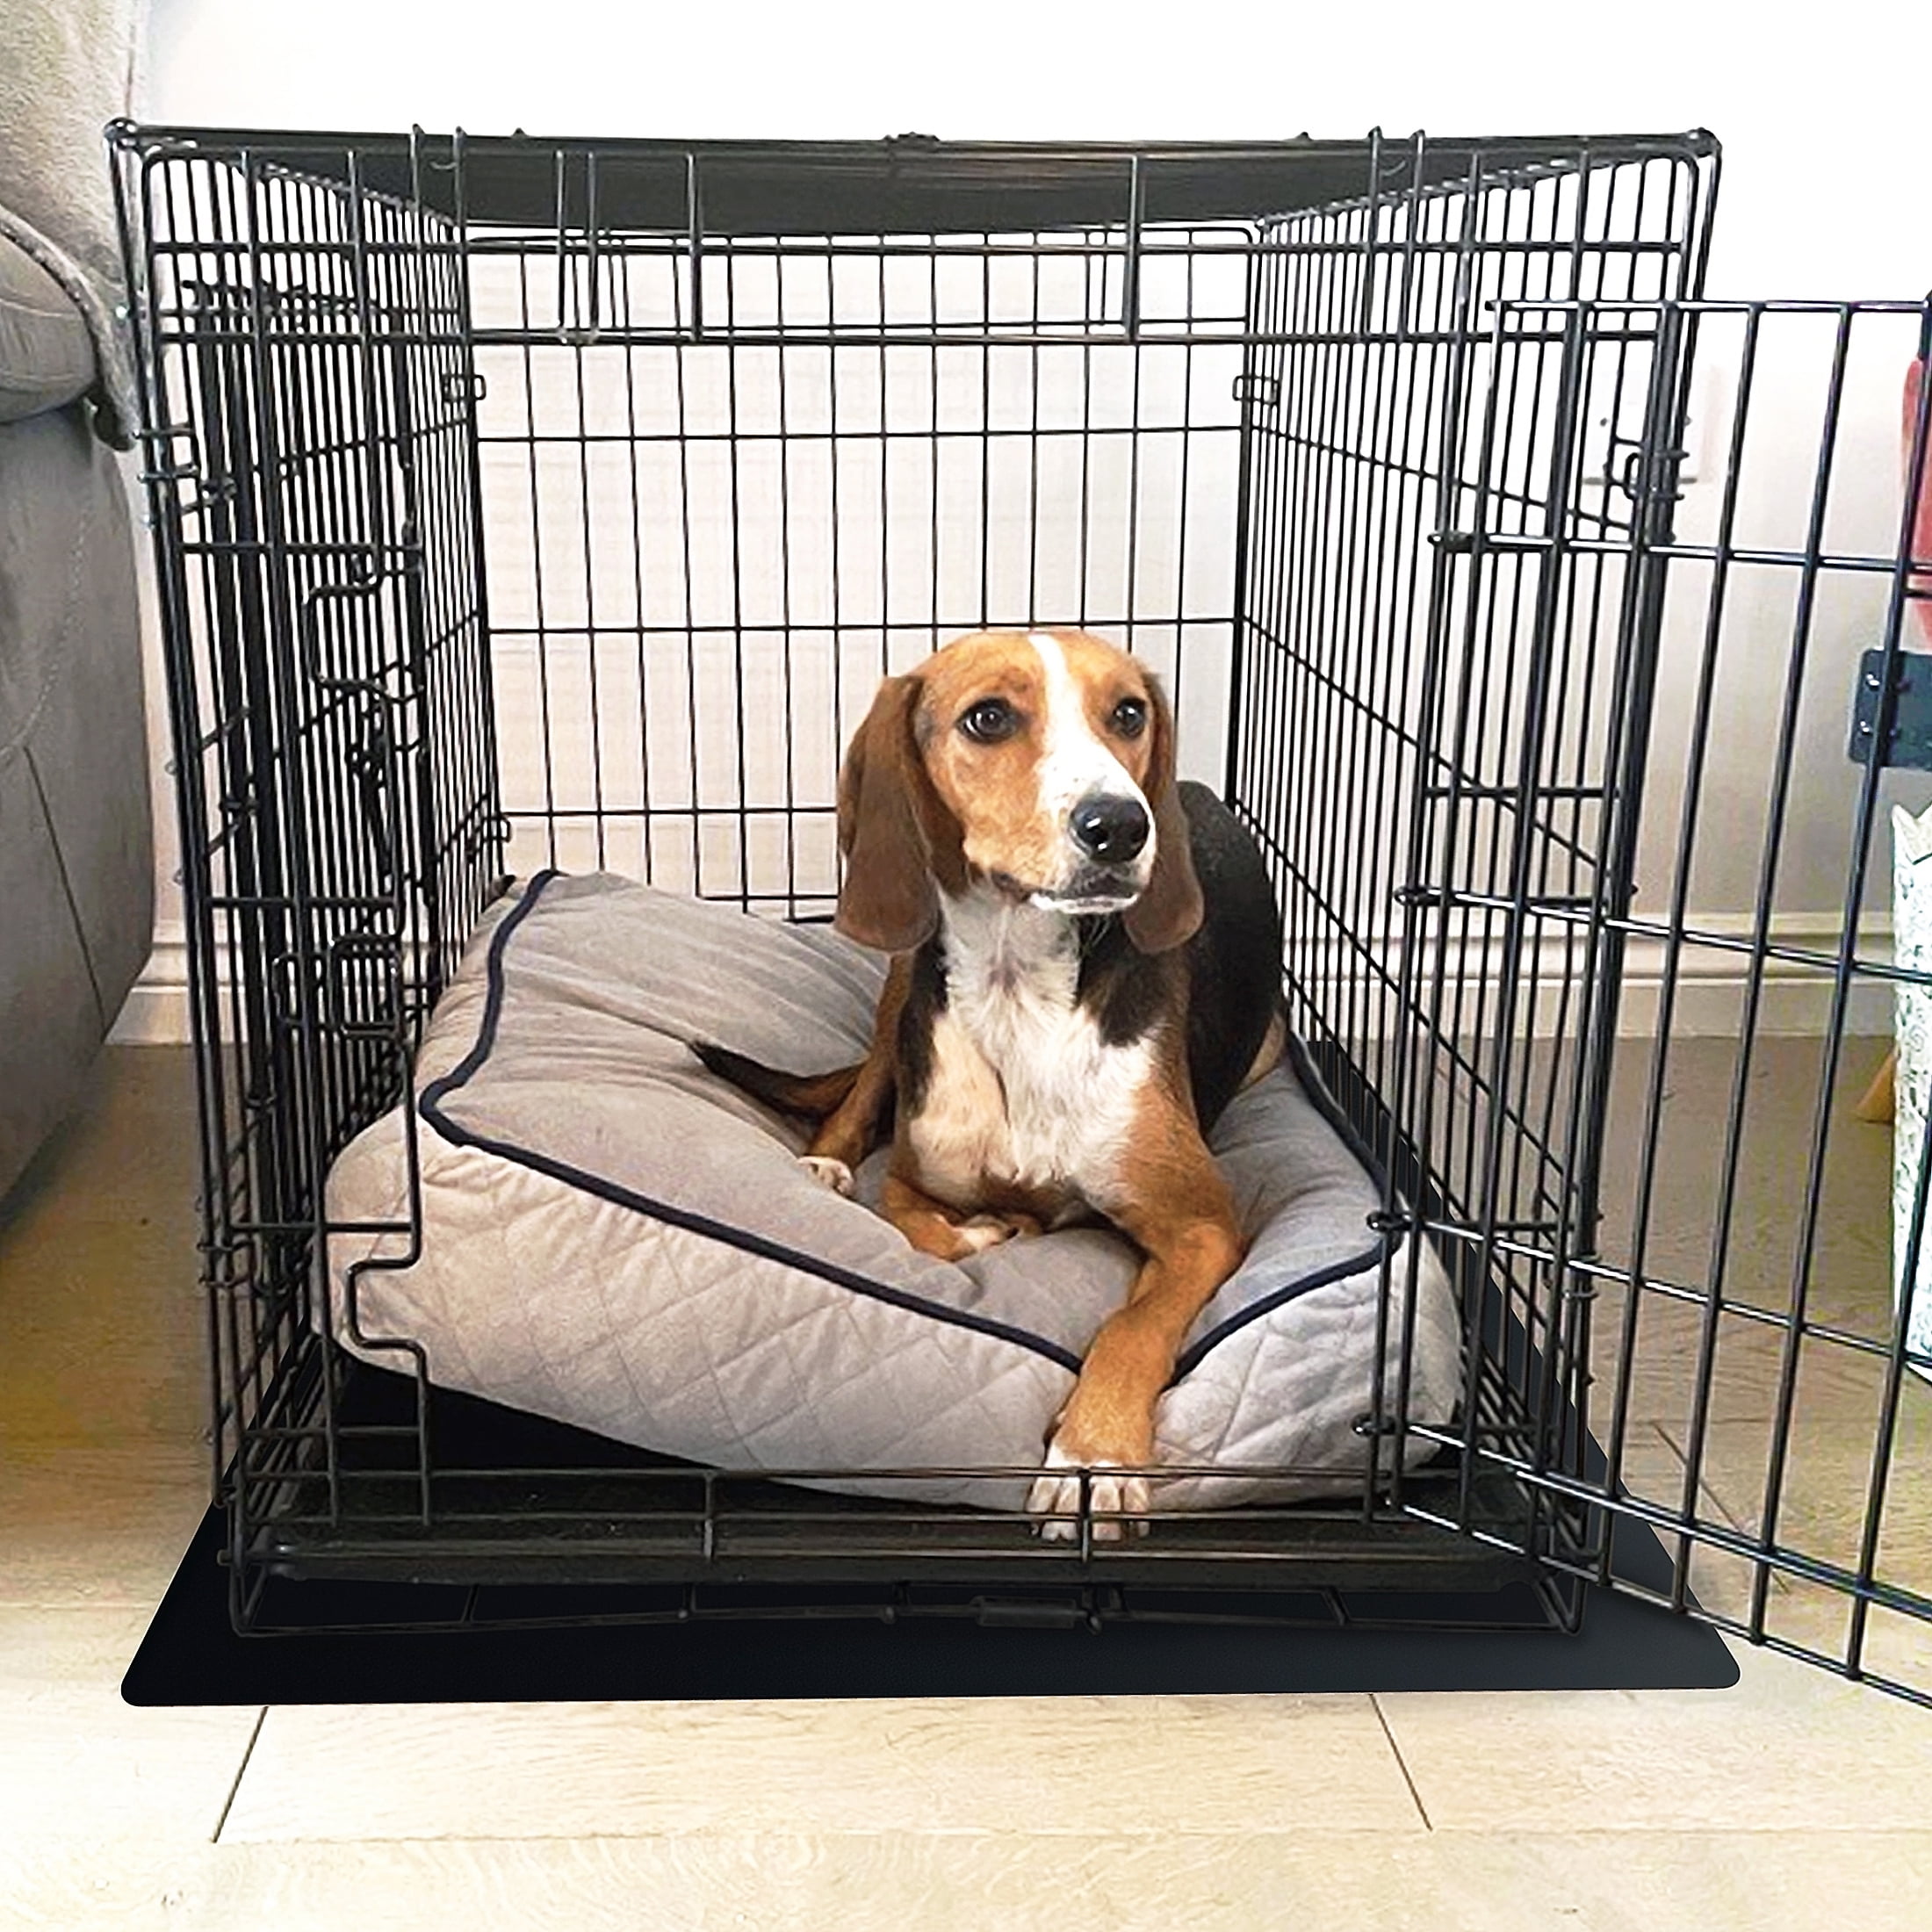 PROCIPE Large Dog Bed Crate Mat 42 Washable Pet Beds Soft Dog Mattress  Anti-Slip Kennel Mats (Gray) 